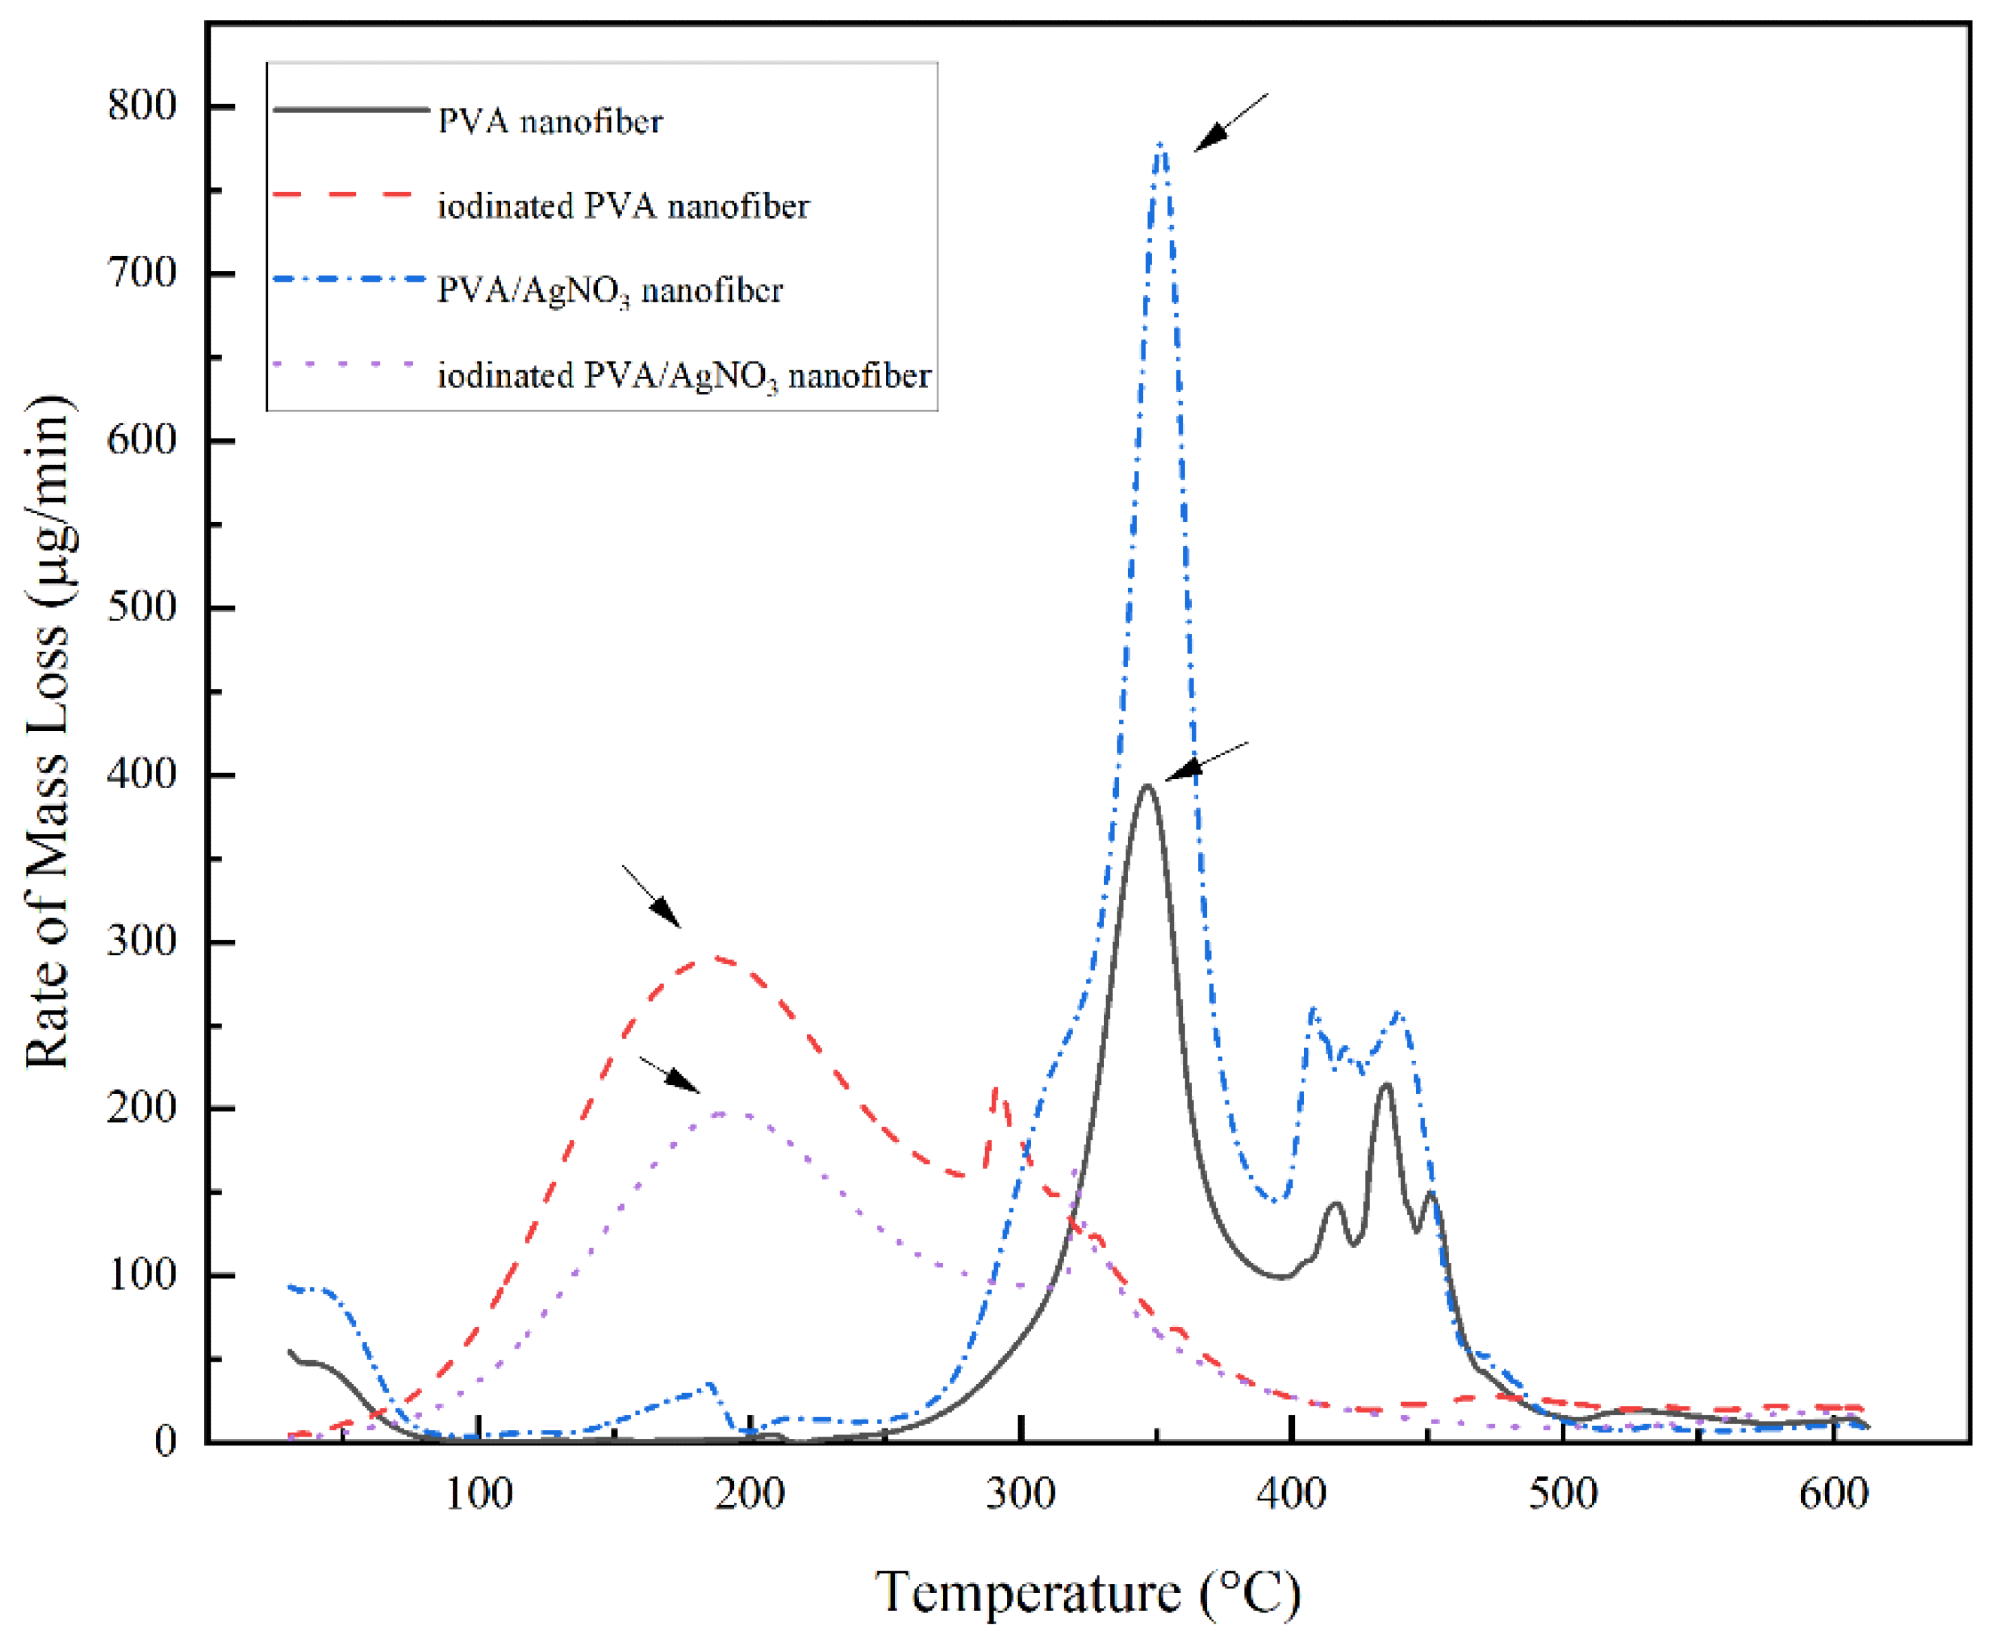 DTG thermogram of PVA nanofiber, iodinated PVA nanofiber, PVA/AgNO3 nanofiber and iodinated PVA/AgNO3 nanofiber.